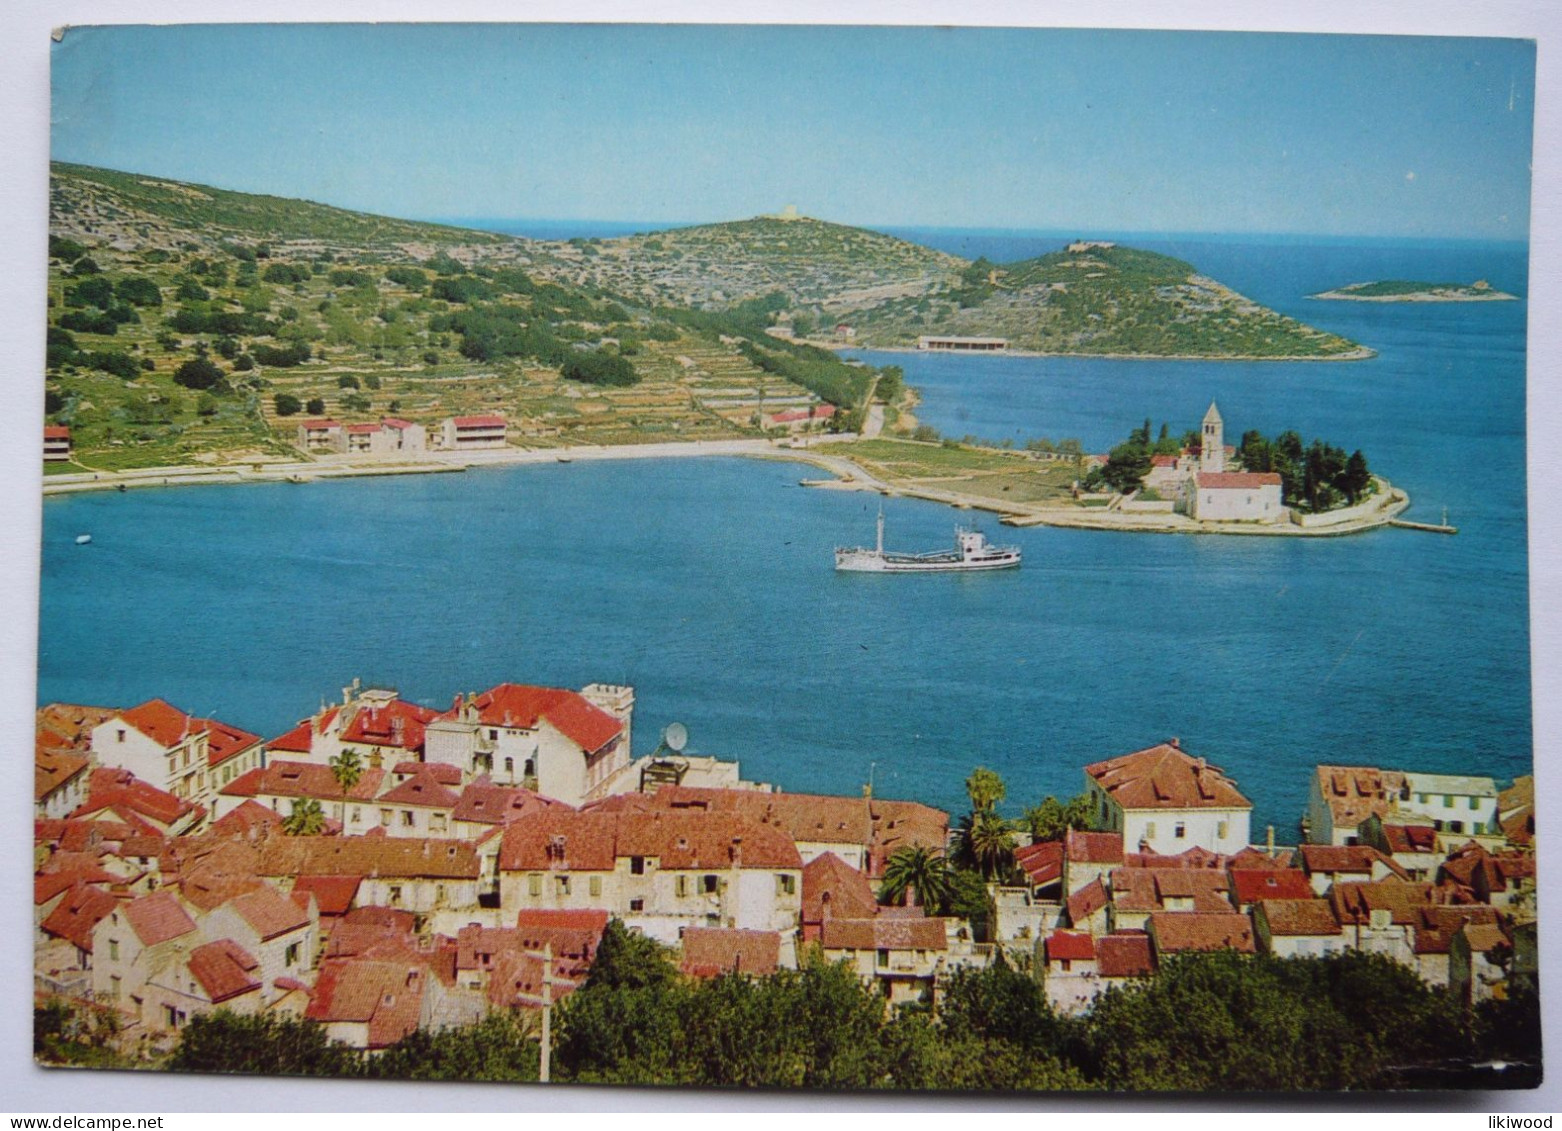 Otok Vis (Island Vis) - Kroatien